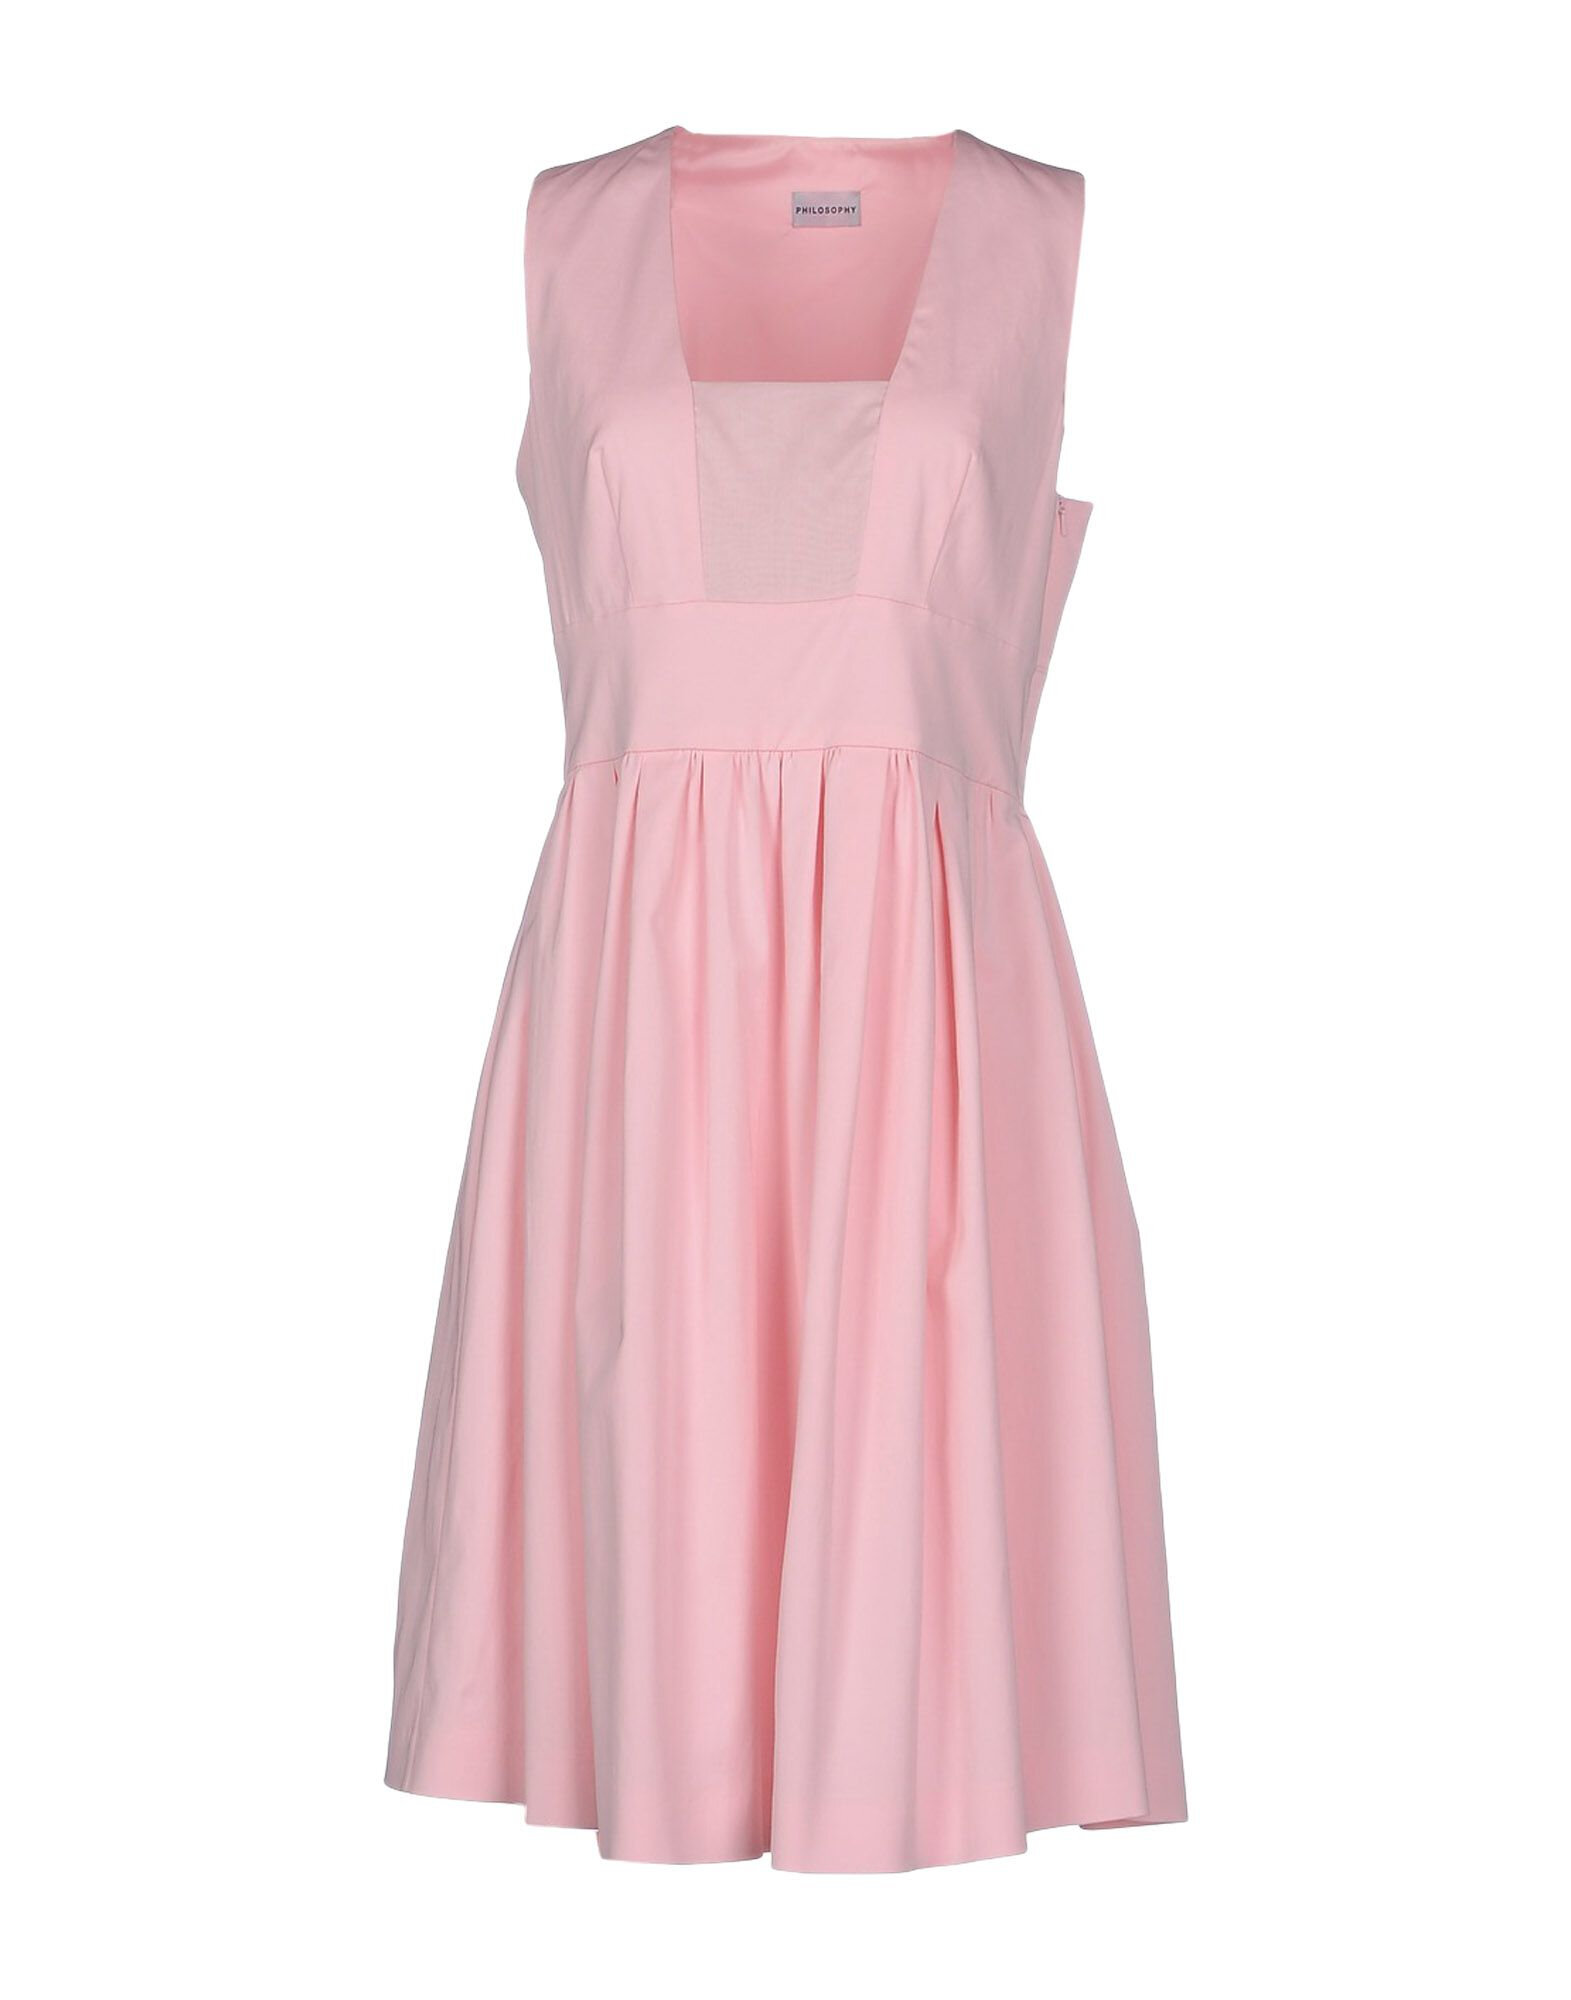 Philosophy Sleeveless Mini Dress in Pink .jpg